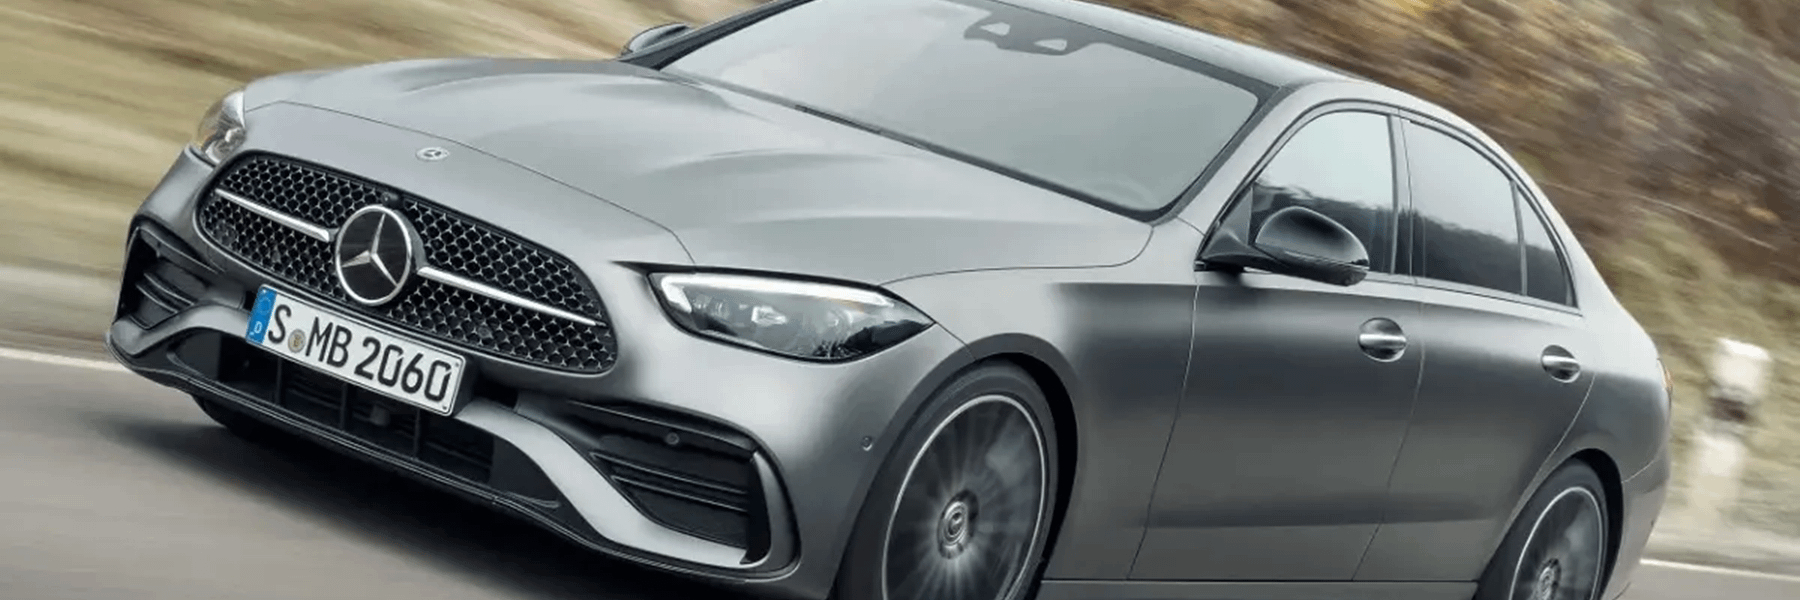 2021 Mercedes-Benz C-class revealed